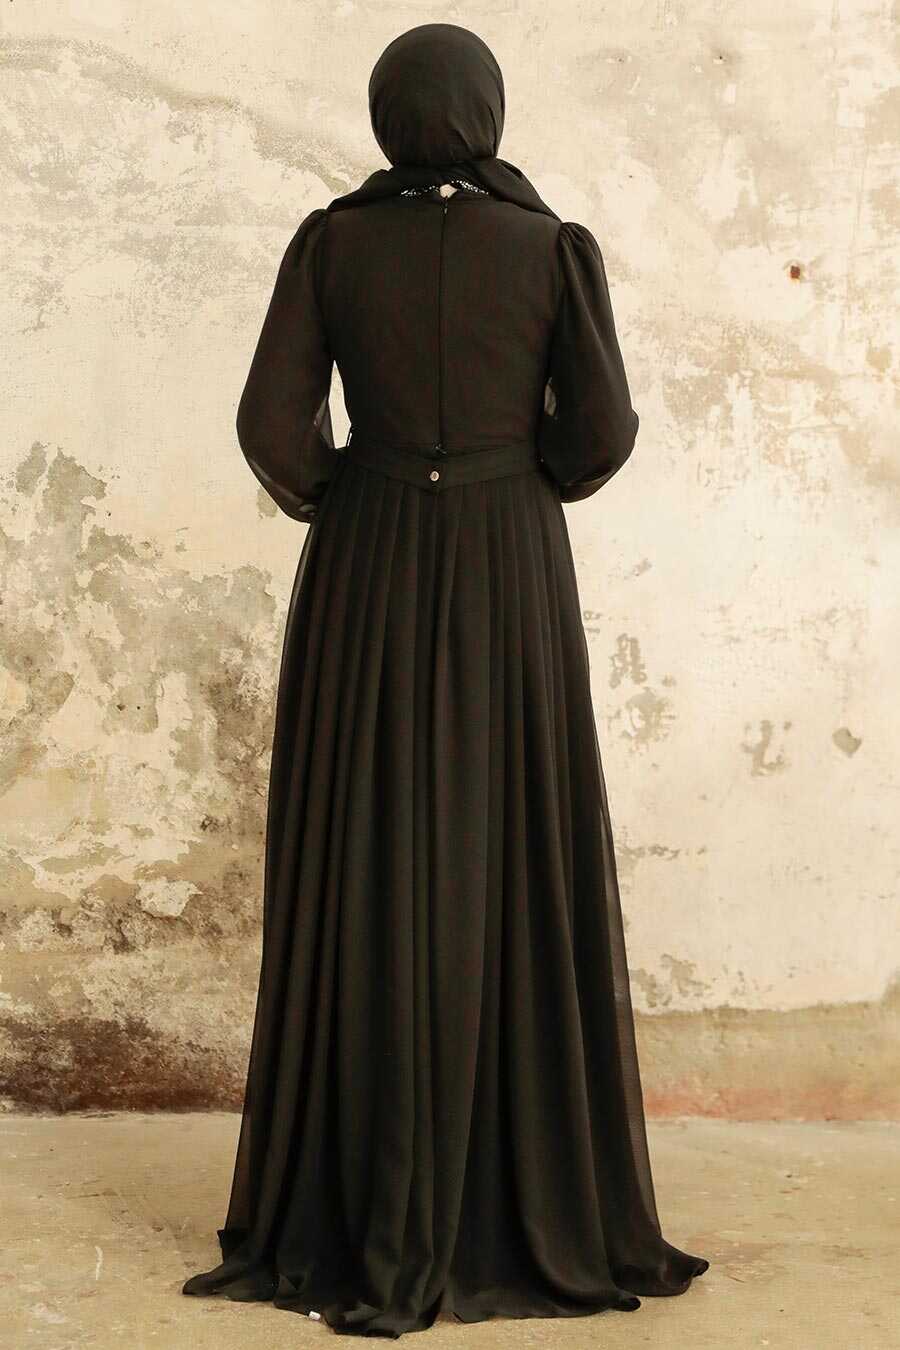 Neva Style - Elegant Black Muslim Long Sleeve Dress 3773S